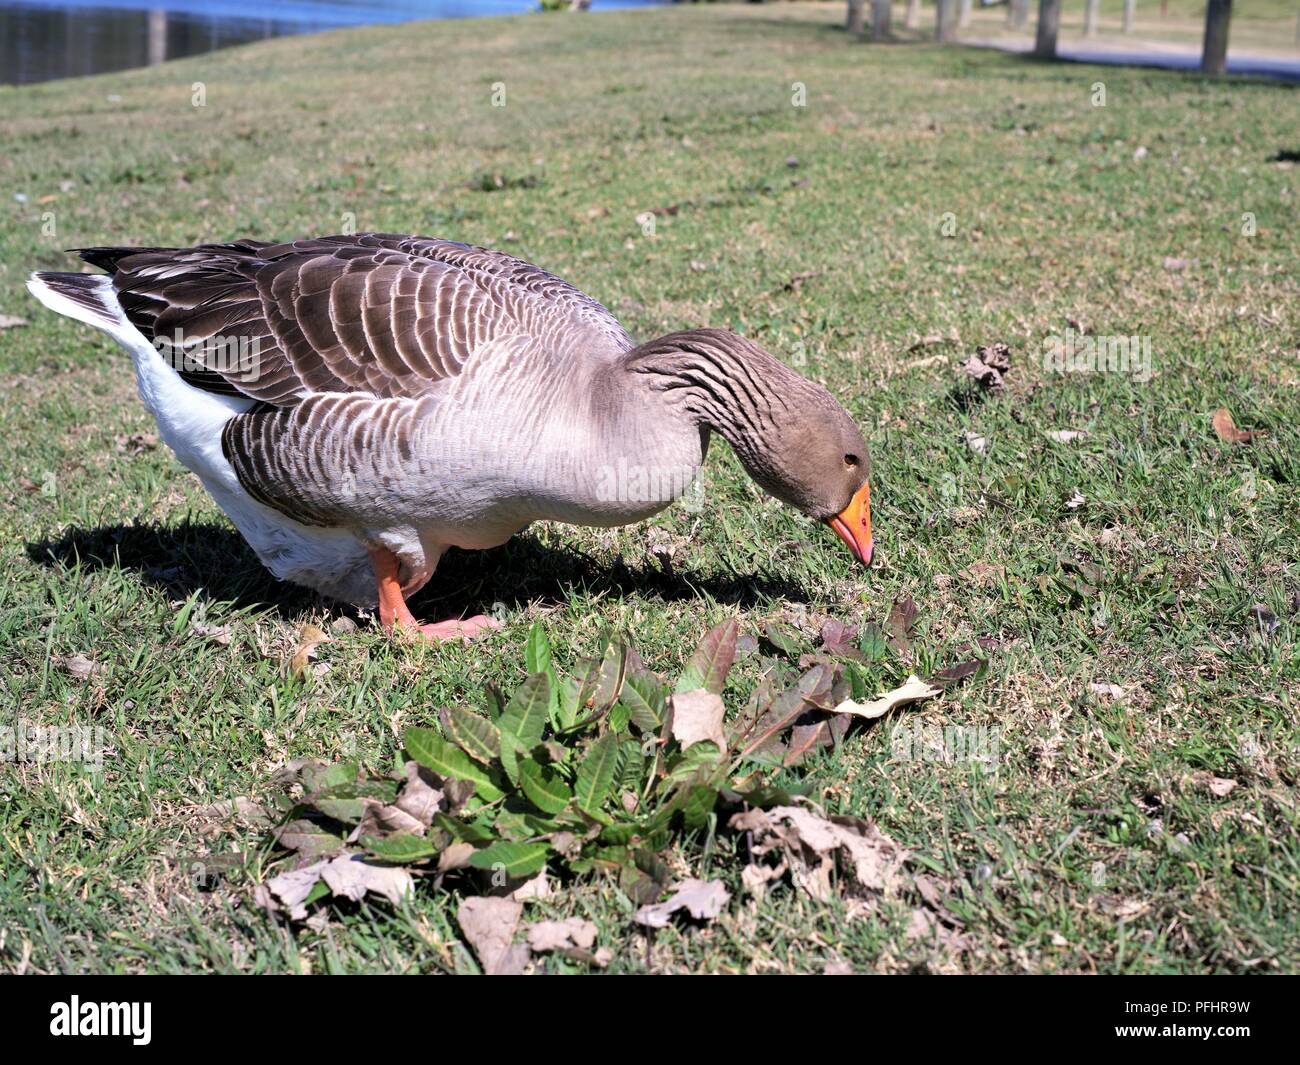 Greylag goose in urban park. Goose in Australia with orange bill and orange or pink legs. Scientific name anser anser. Stock Photo